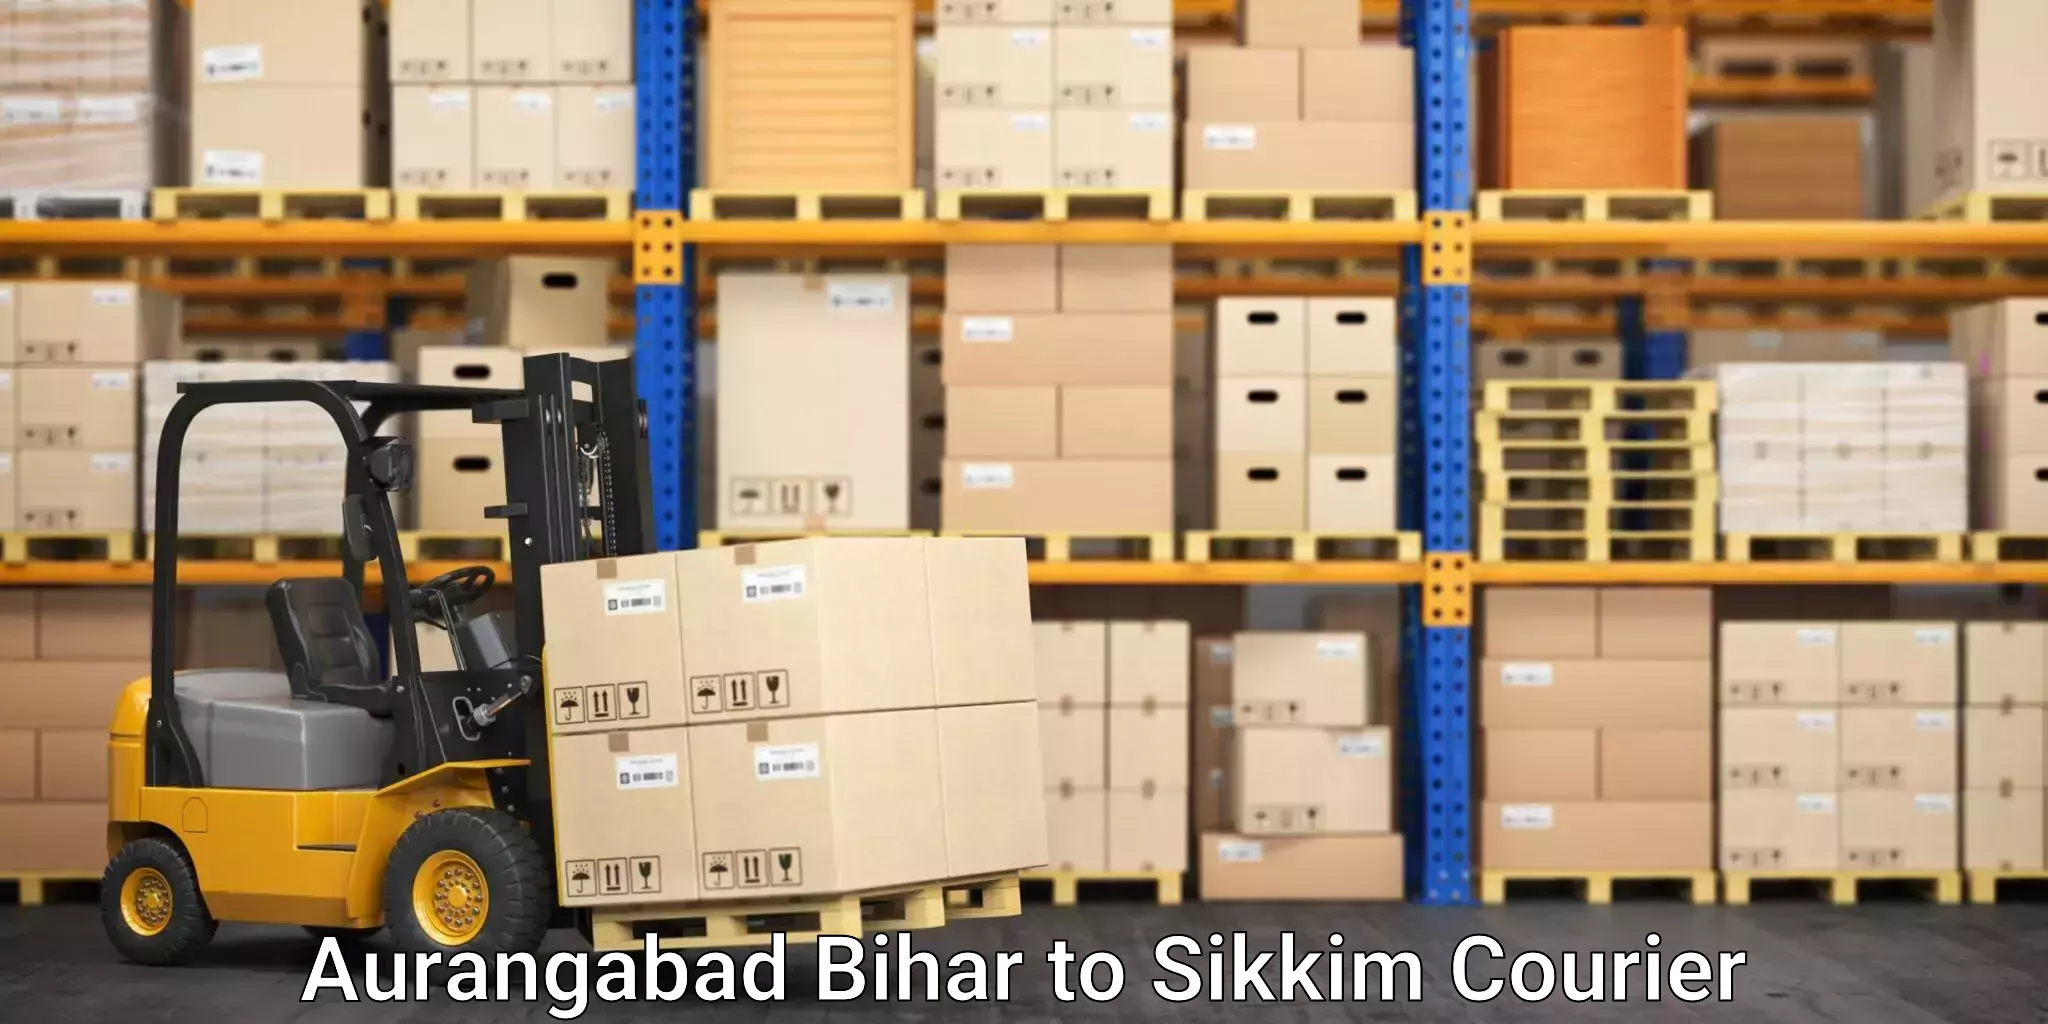 Furniture moving specialists Aurangabad Bihar to Ranipool